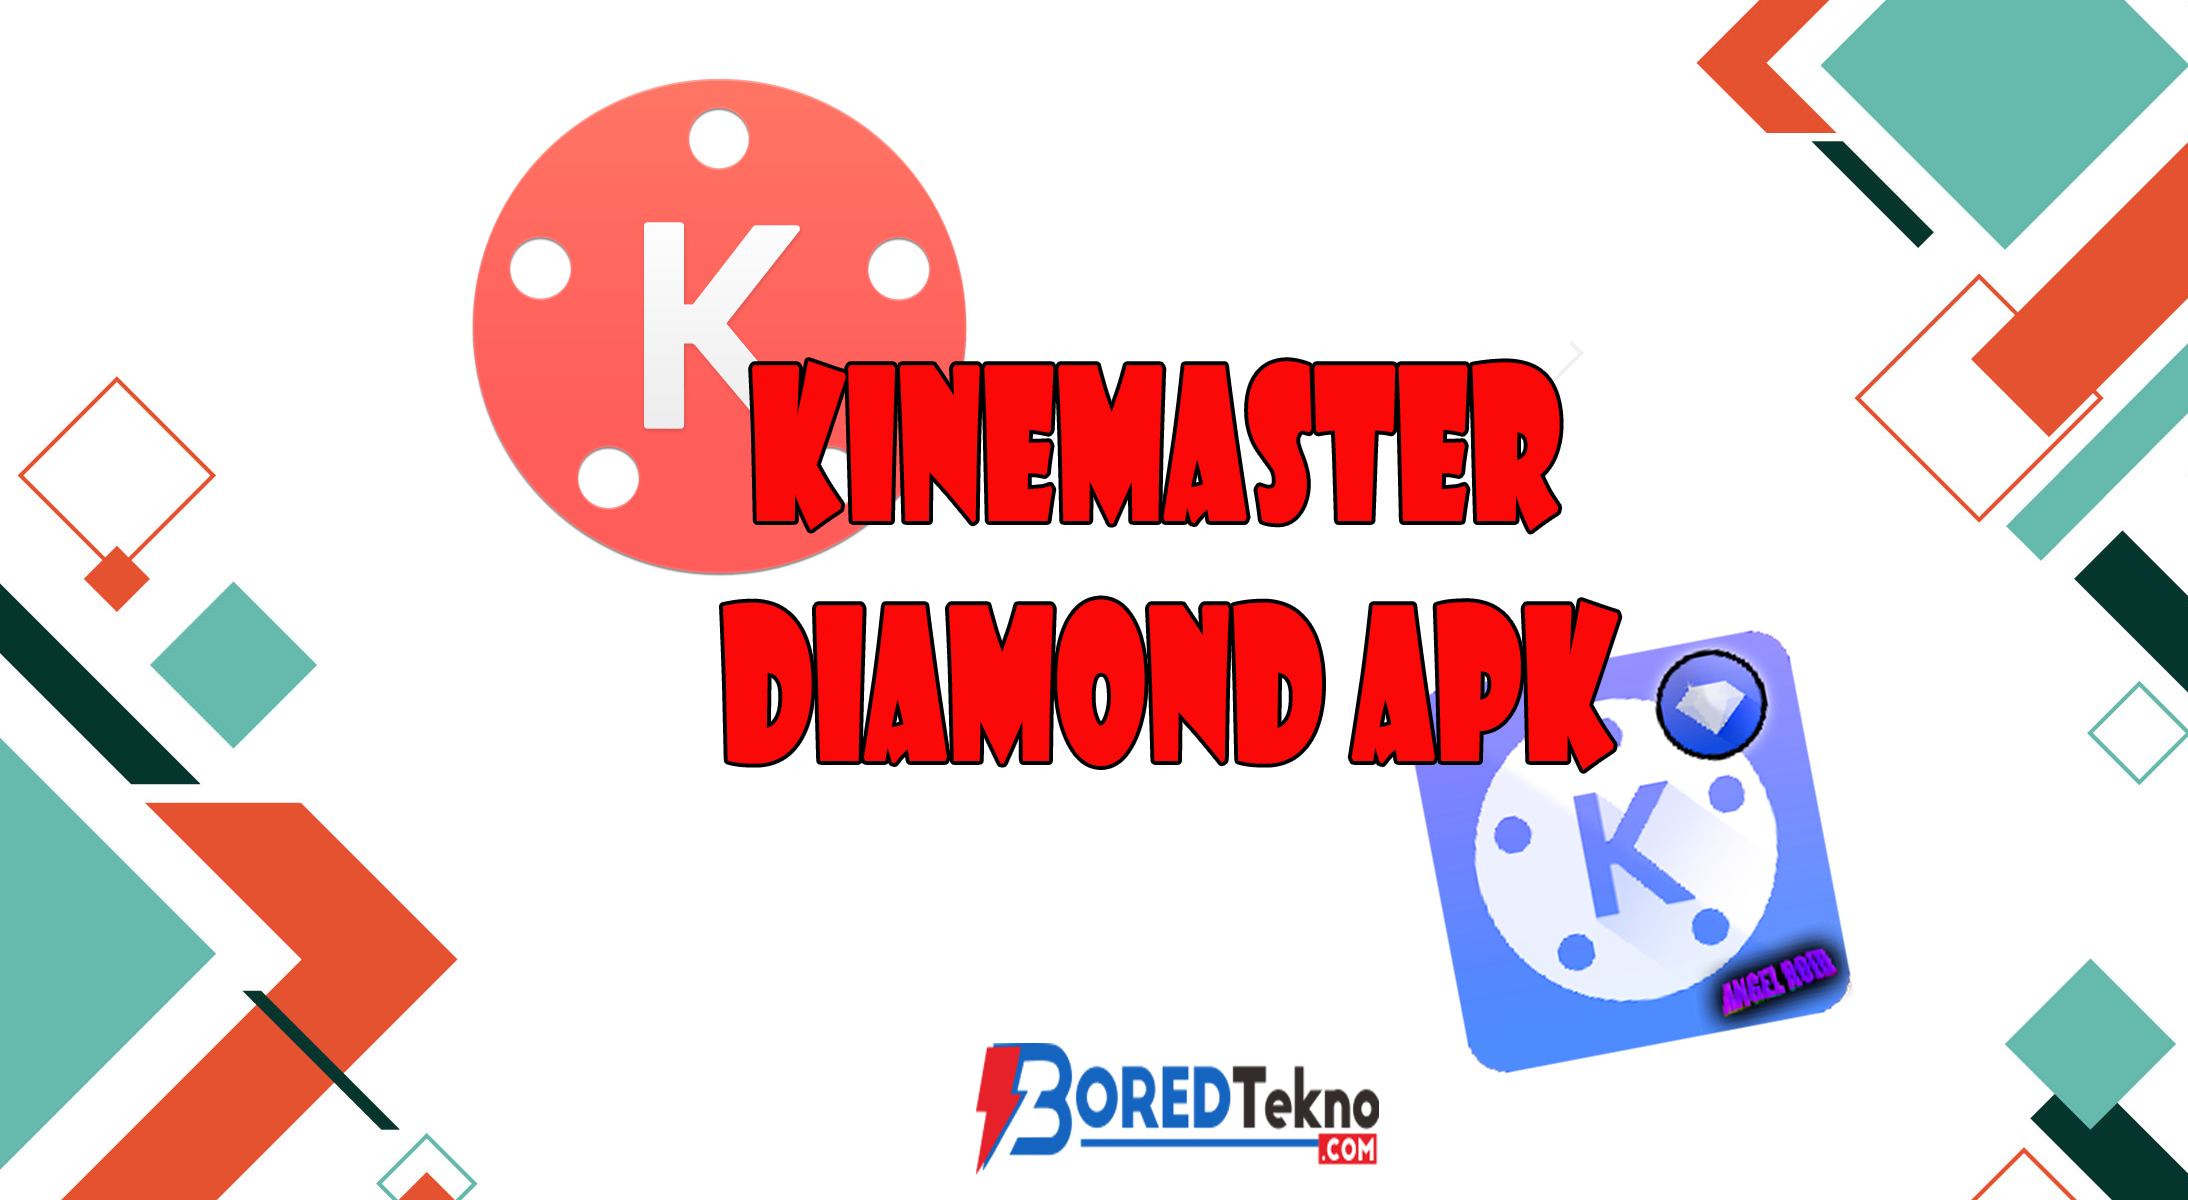 kinemaster diamond apk download